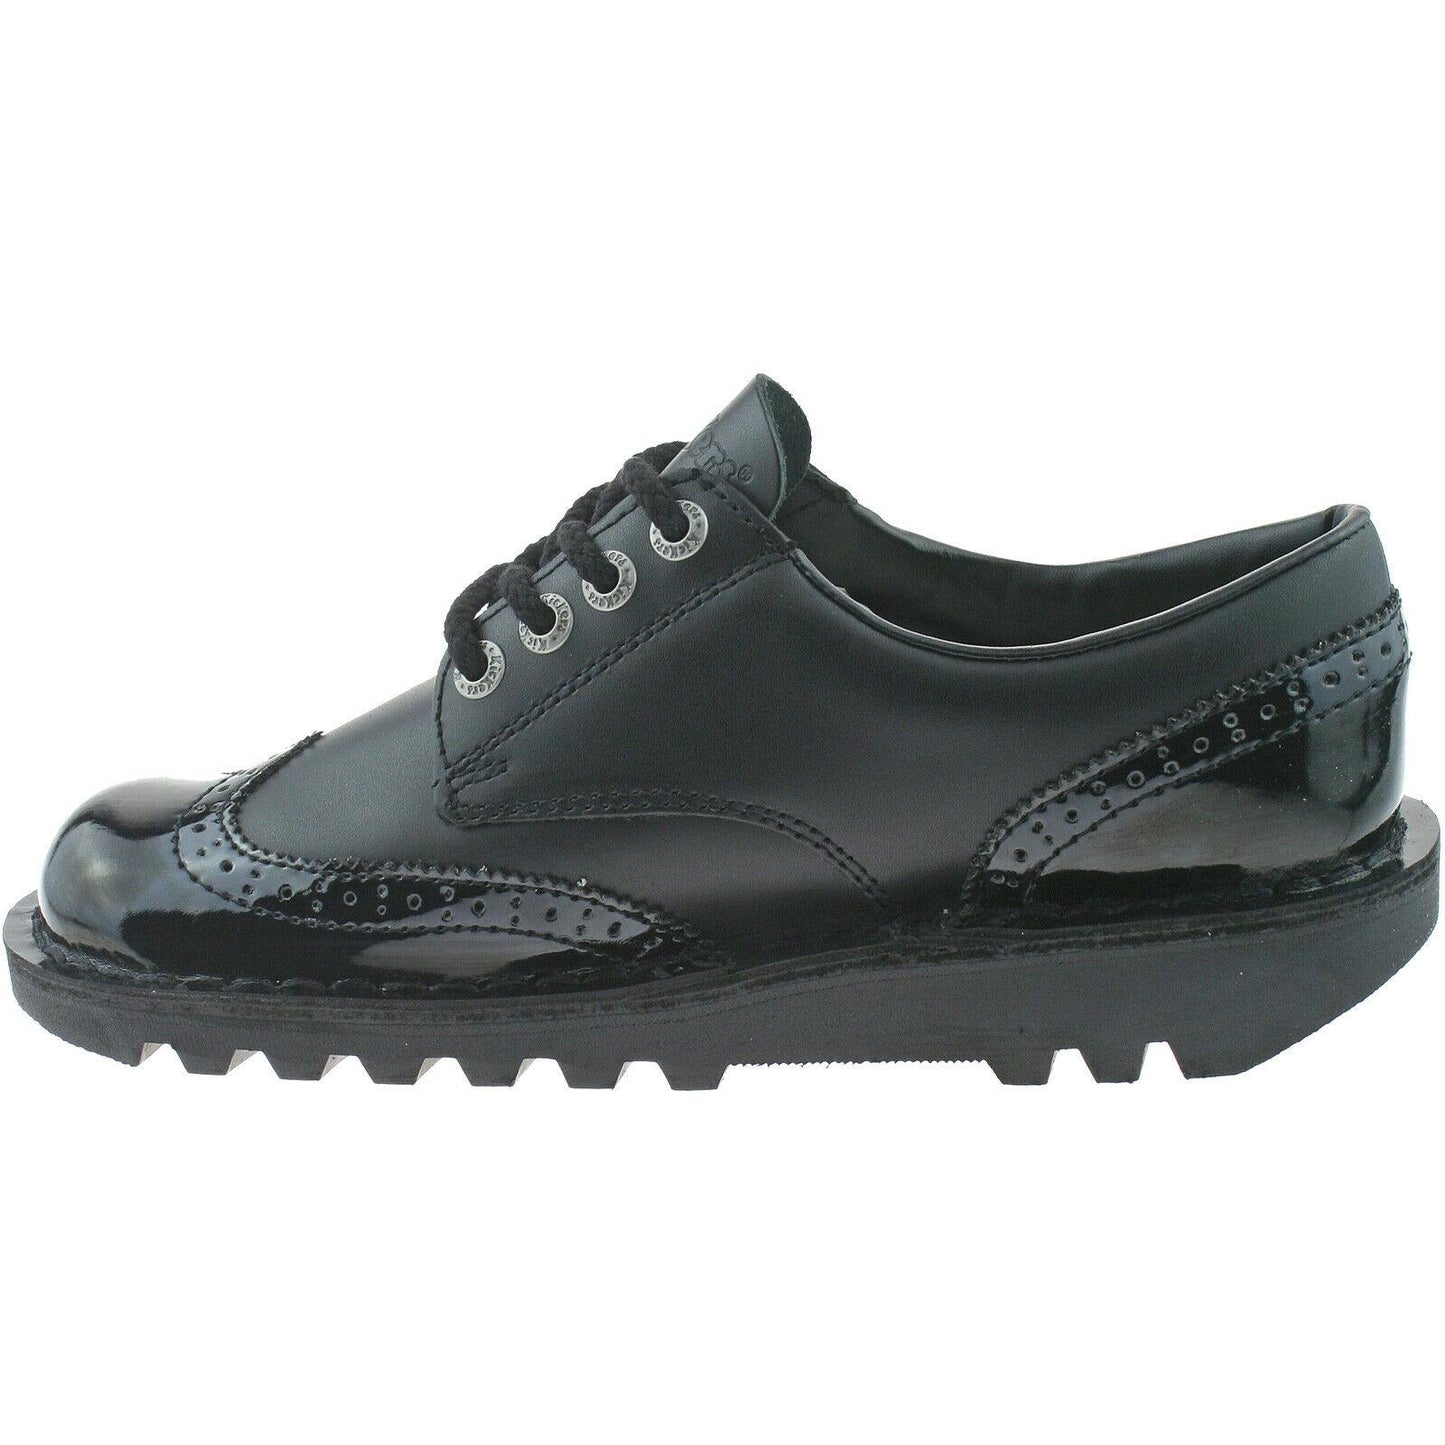 Ladies Kickers Kick Lo Brogue Core Black Patent Leather School Shoes 1-10689